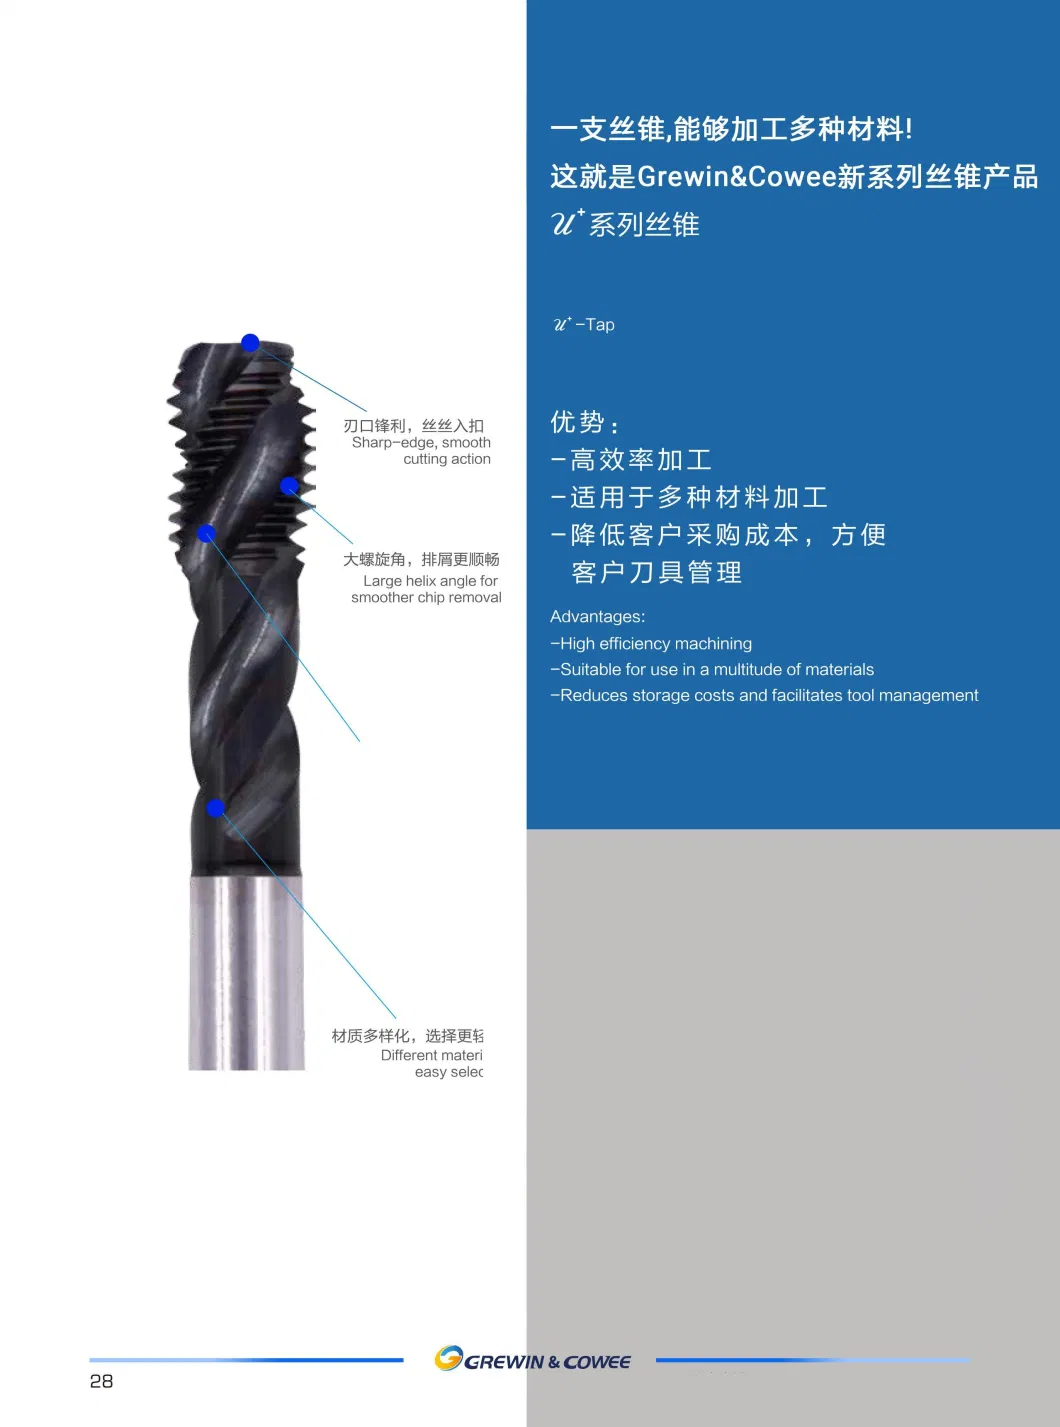 Grewin&Cowee-China Manufacturer High Performance HSS-Pm Hsse HSS M35 Taps DIN371/376 M2-M24 Spiral Point Thread Screw Taps for Through/Blind Hole